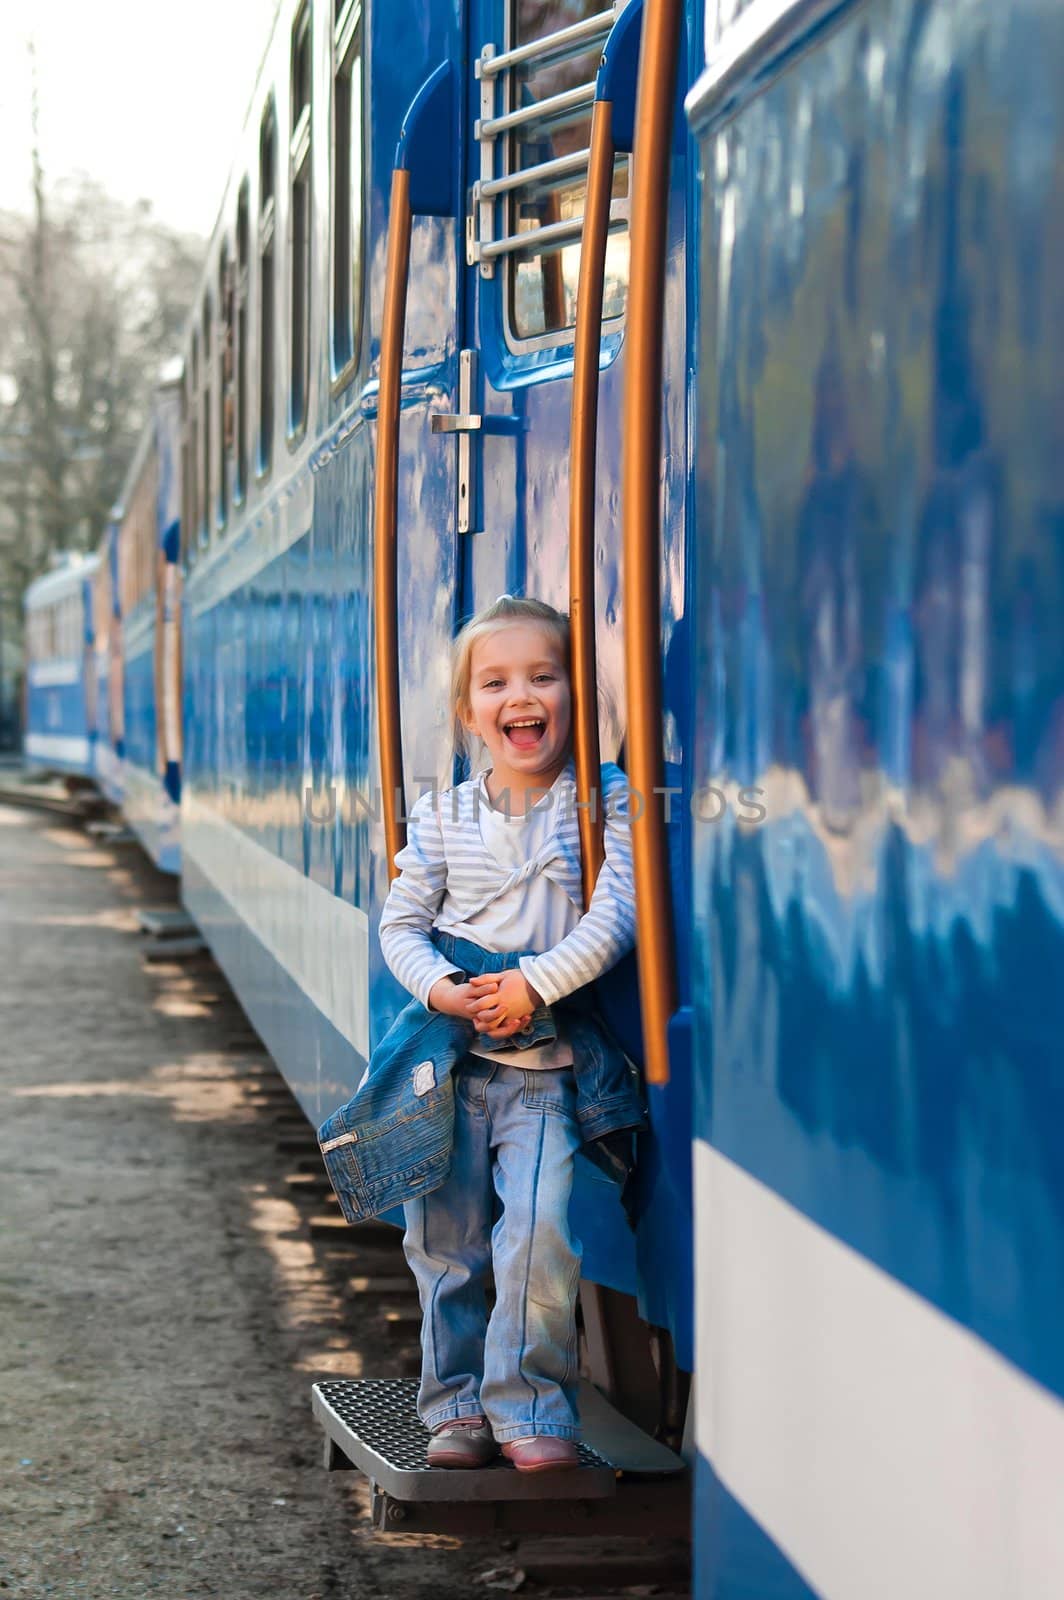 Cute little girl on a train